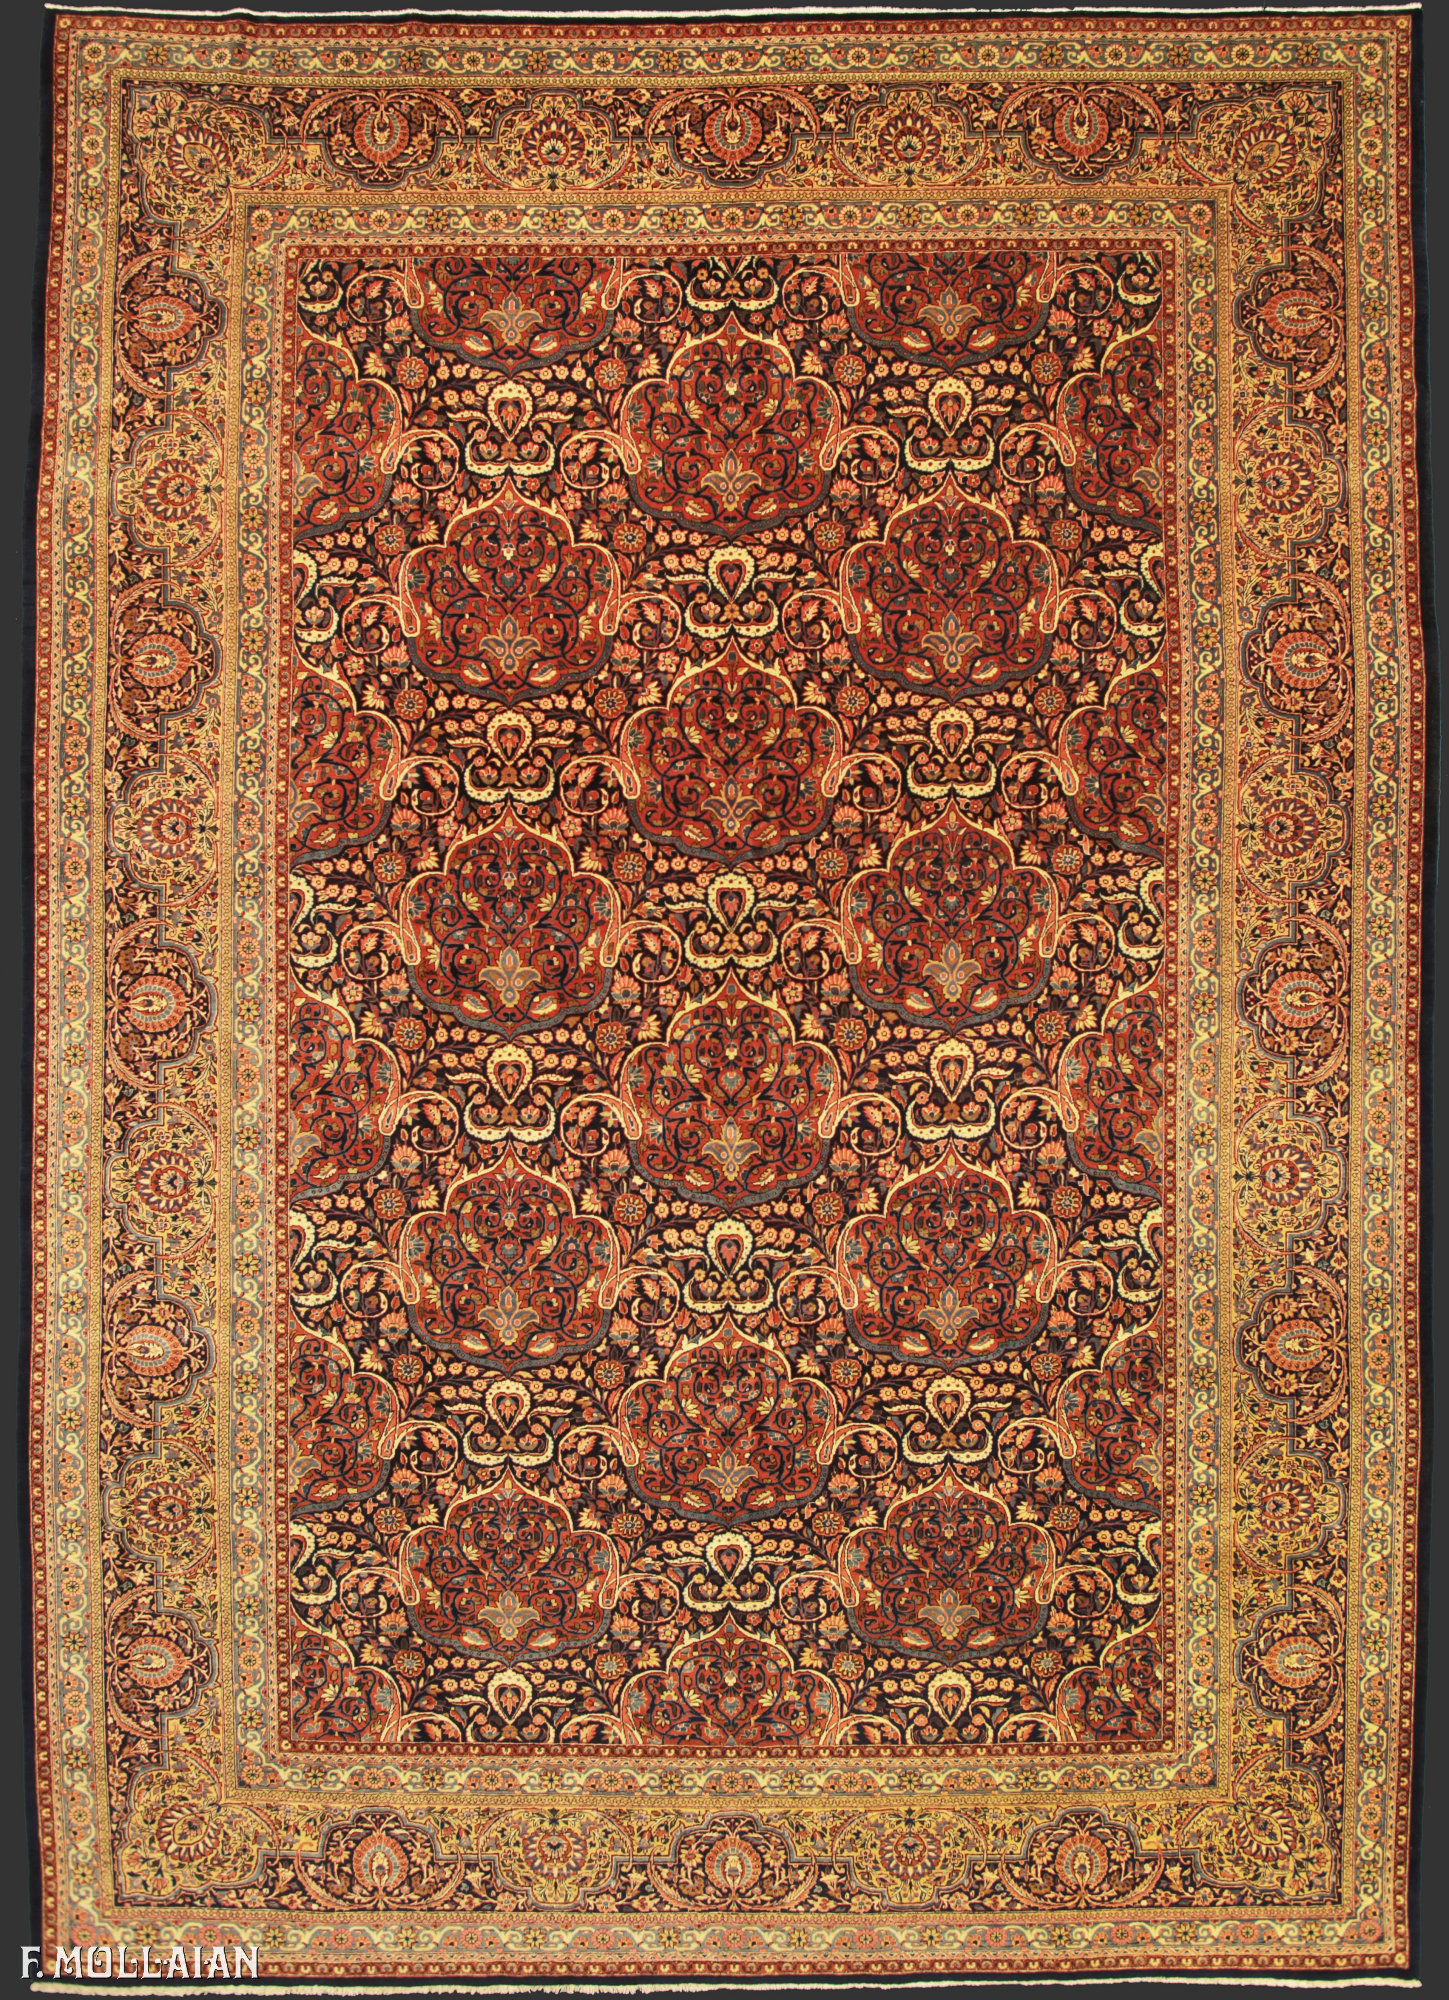 All-Over Antique Persian Kashan Dabir Carpet n°:98151652